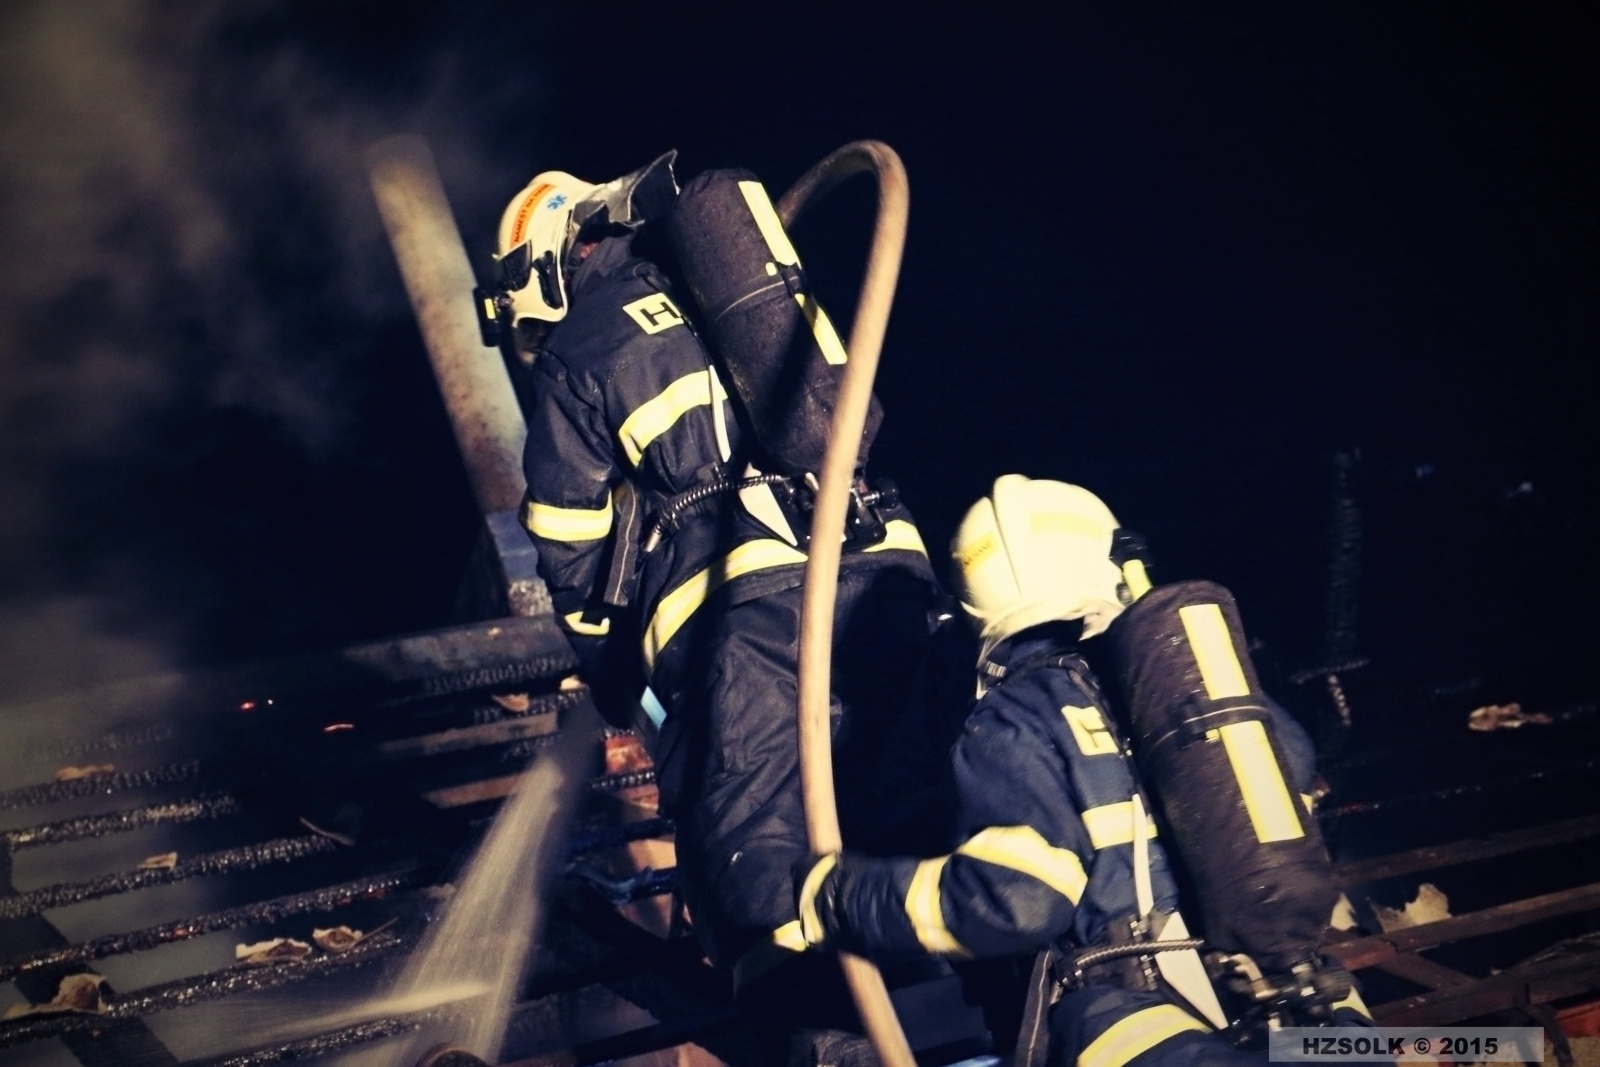 2 P_NB_11-1-2015 Požár budovy a garáží Střížov, Drahanovice (22).JPG